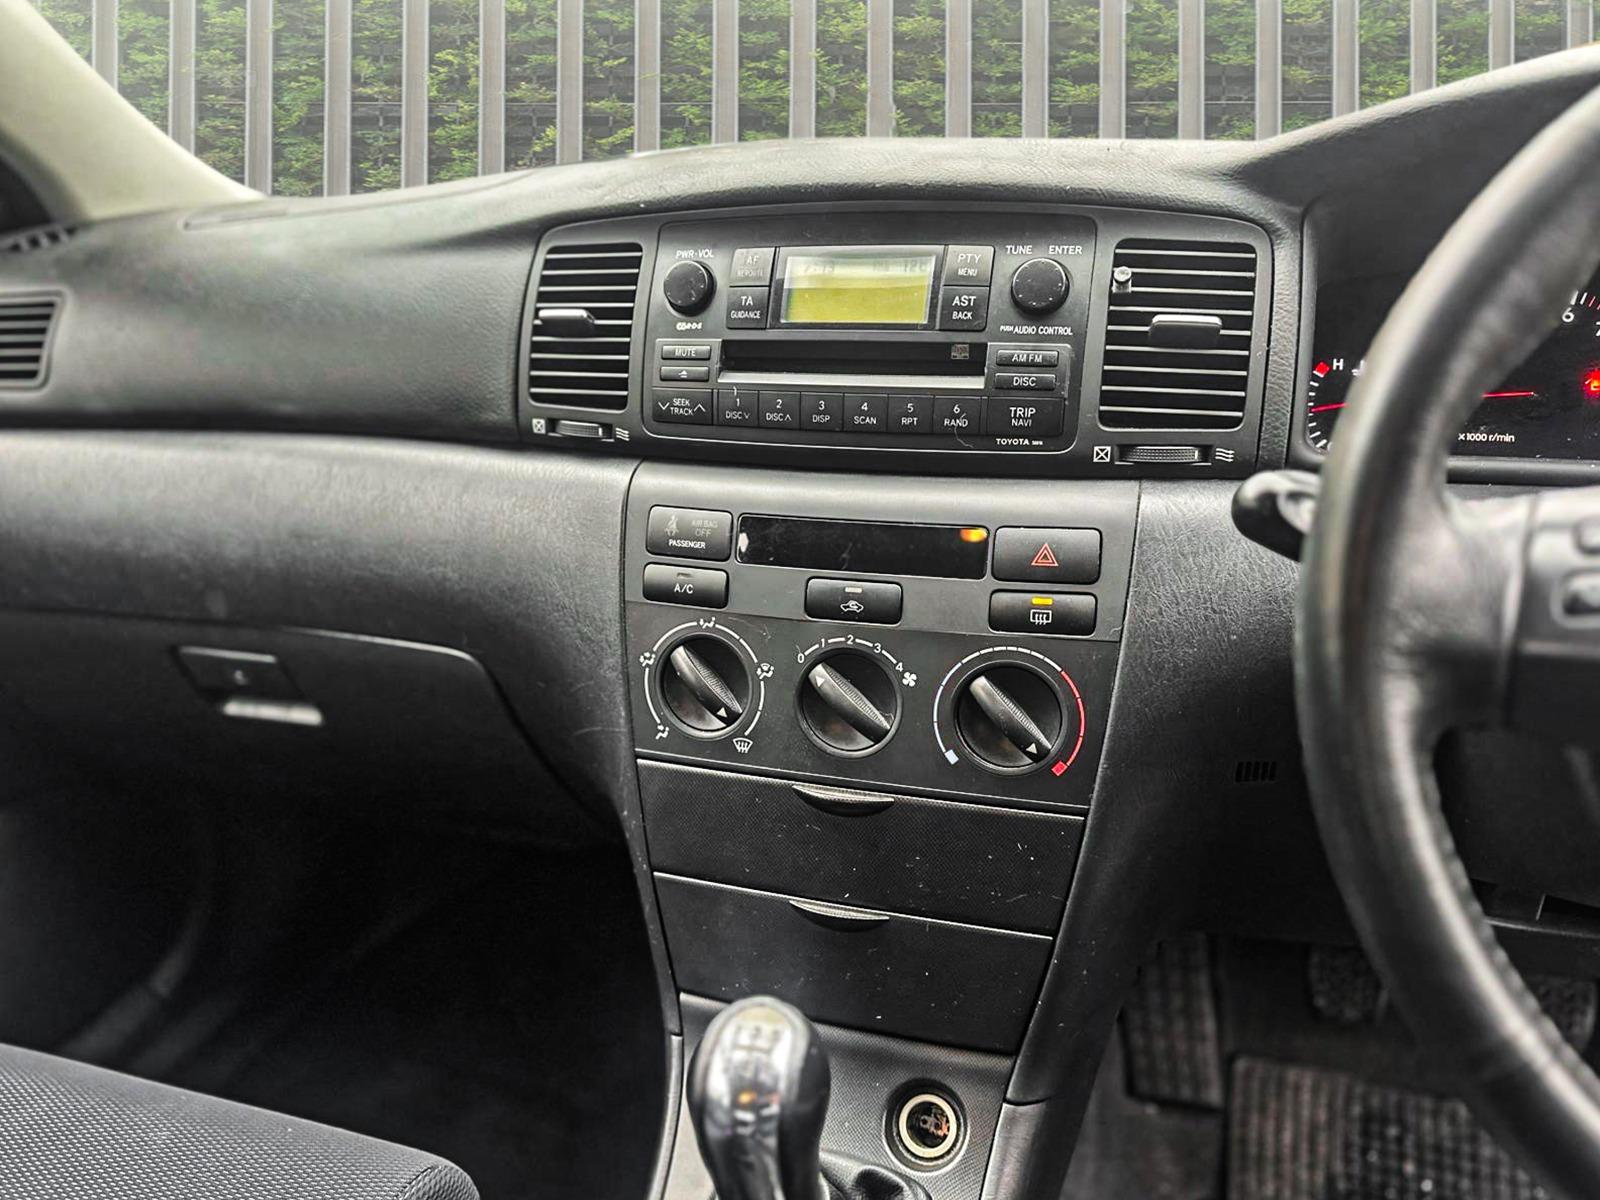 Toyota Corolla 1.4 VVT-i T3 Hatchback 5dr Petrol Manual (159 g/km, 95 bhp)